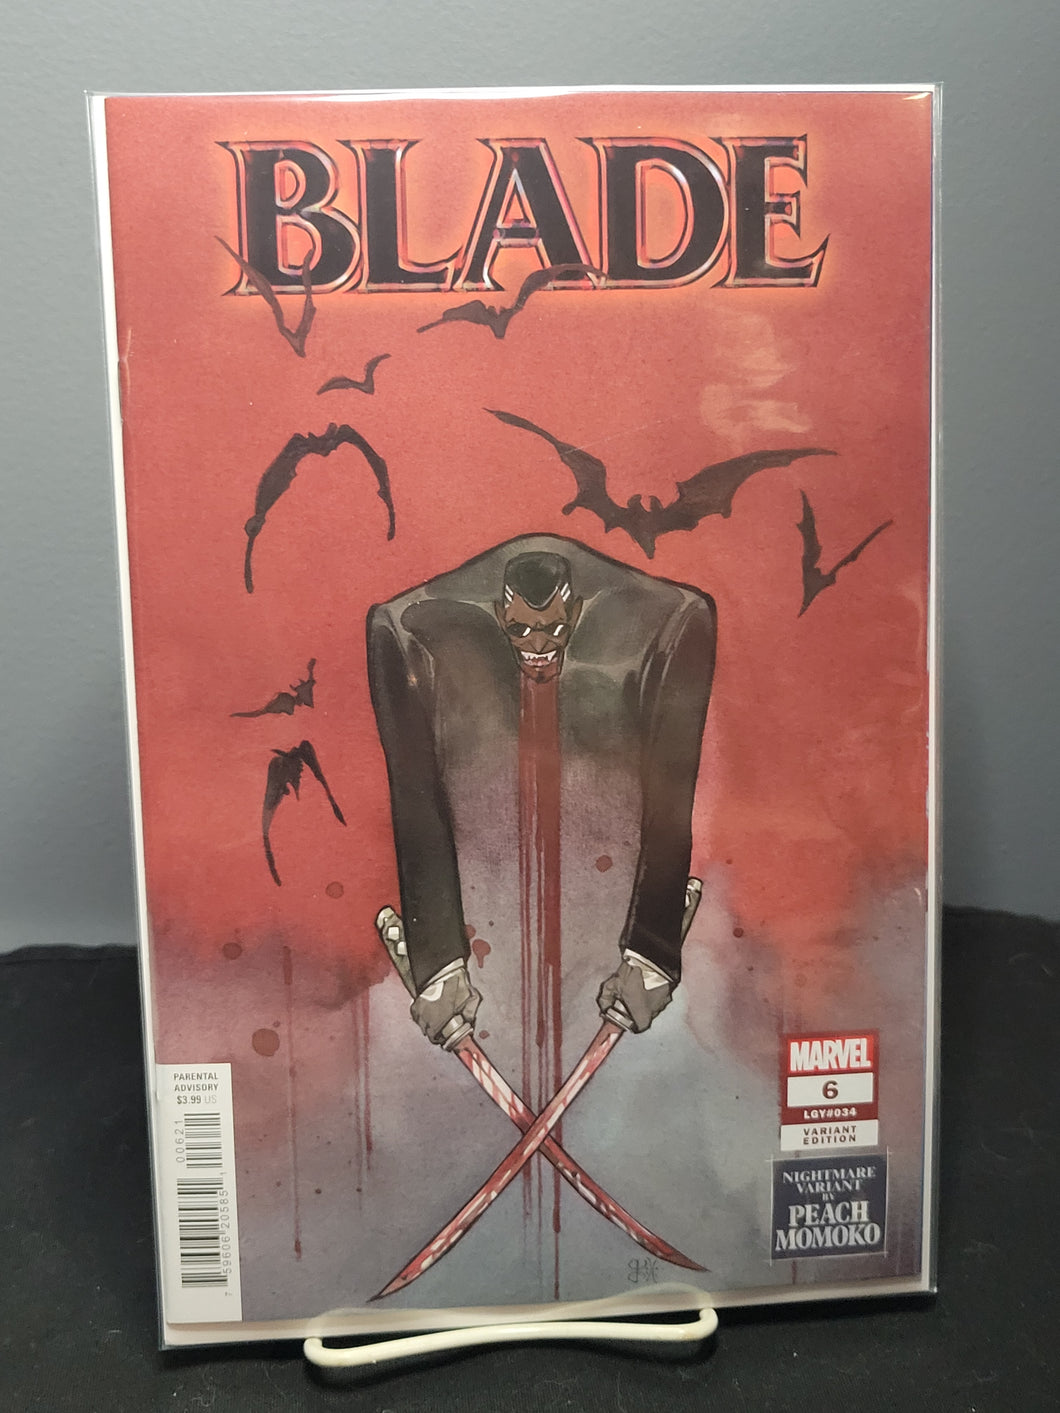 Blade #6 Variant